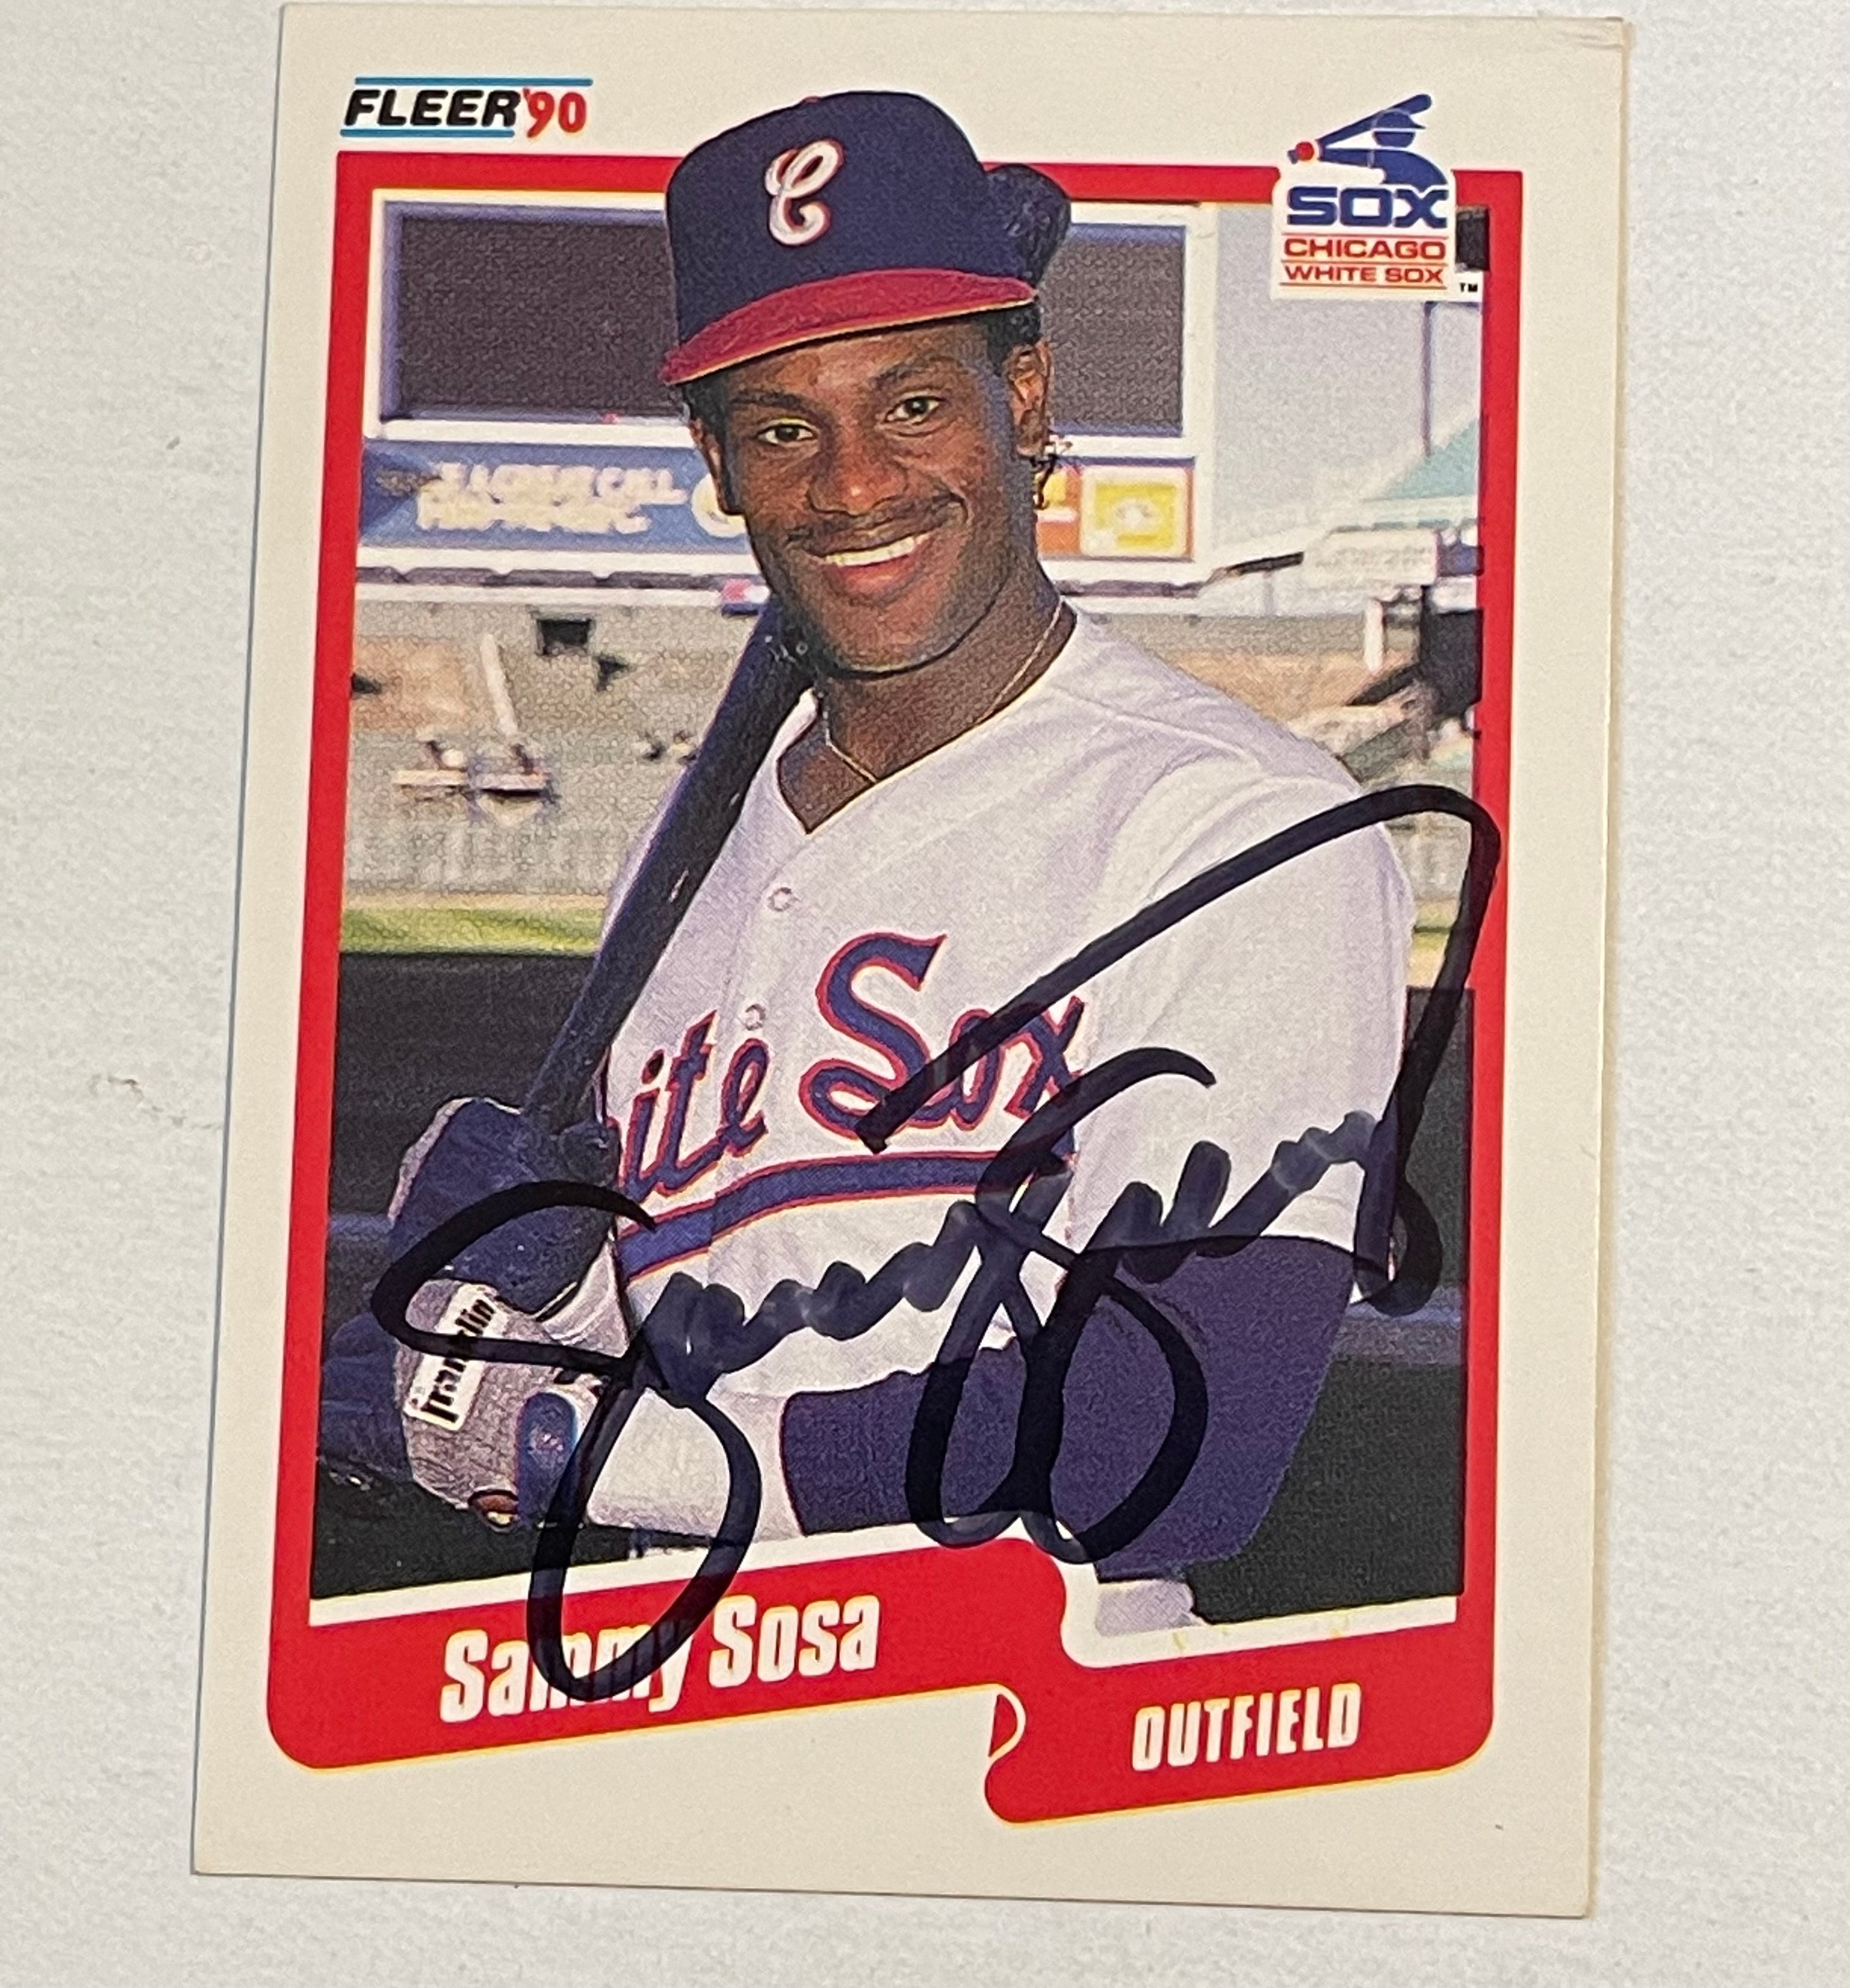 Sammy Sosa rare baseball autograph card with COA